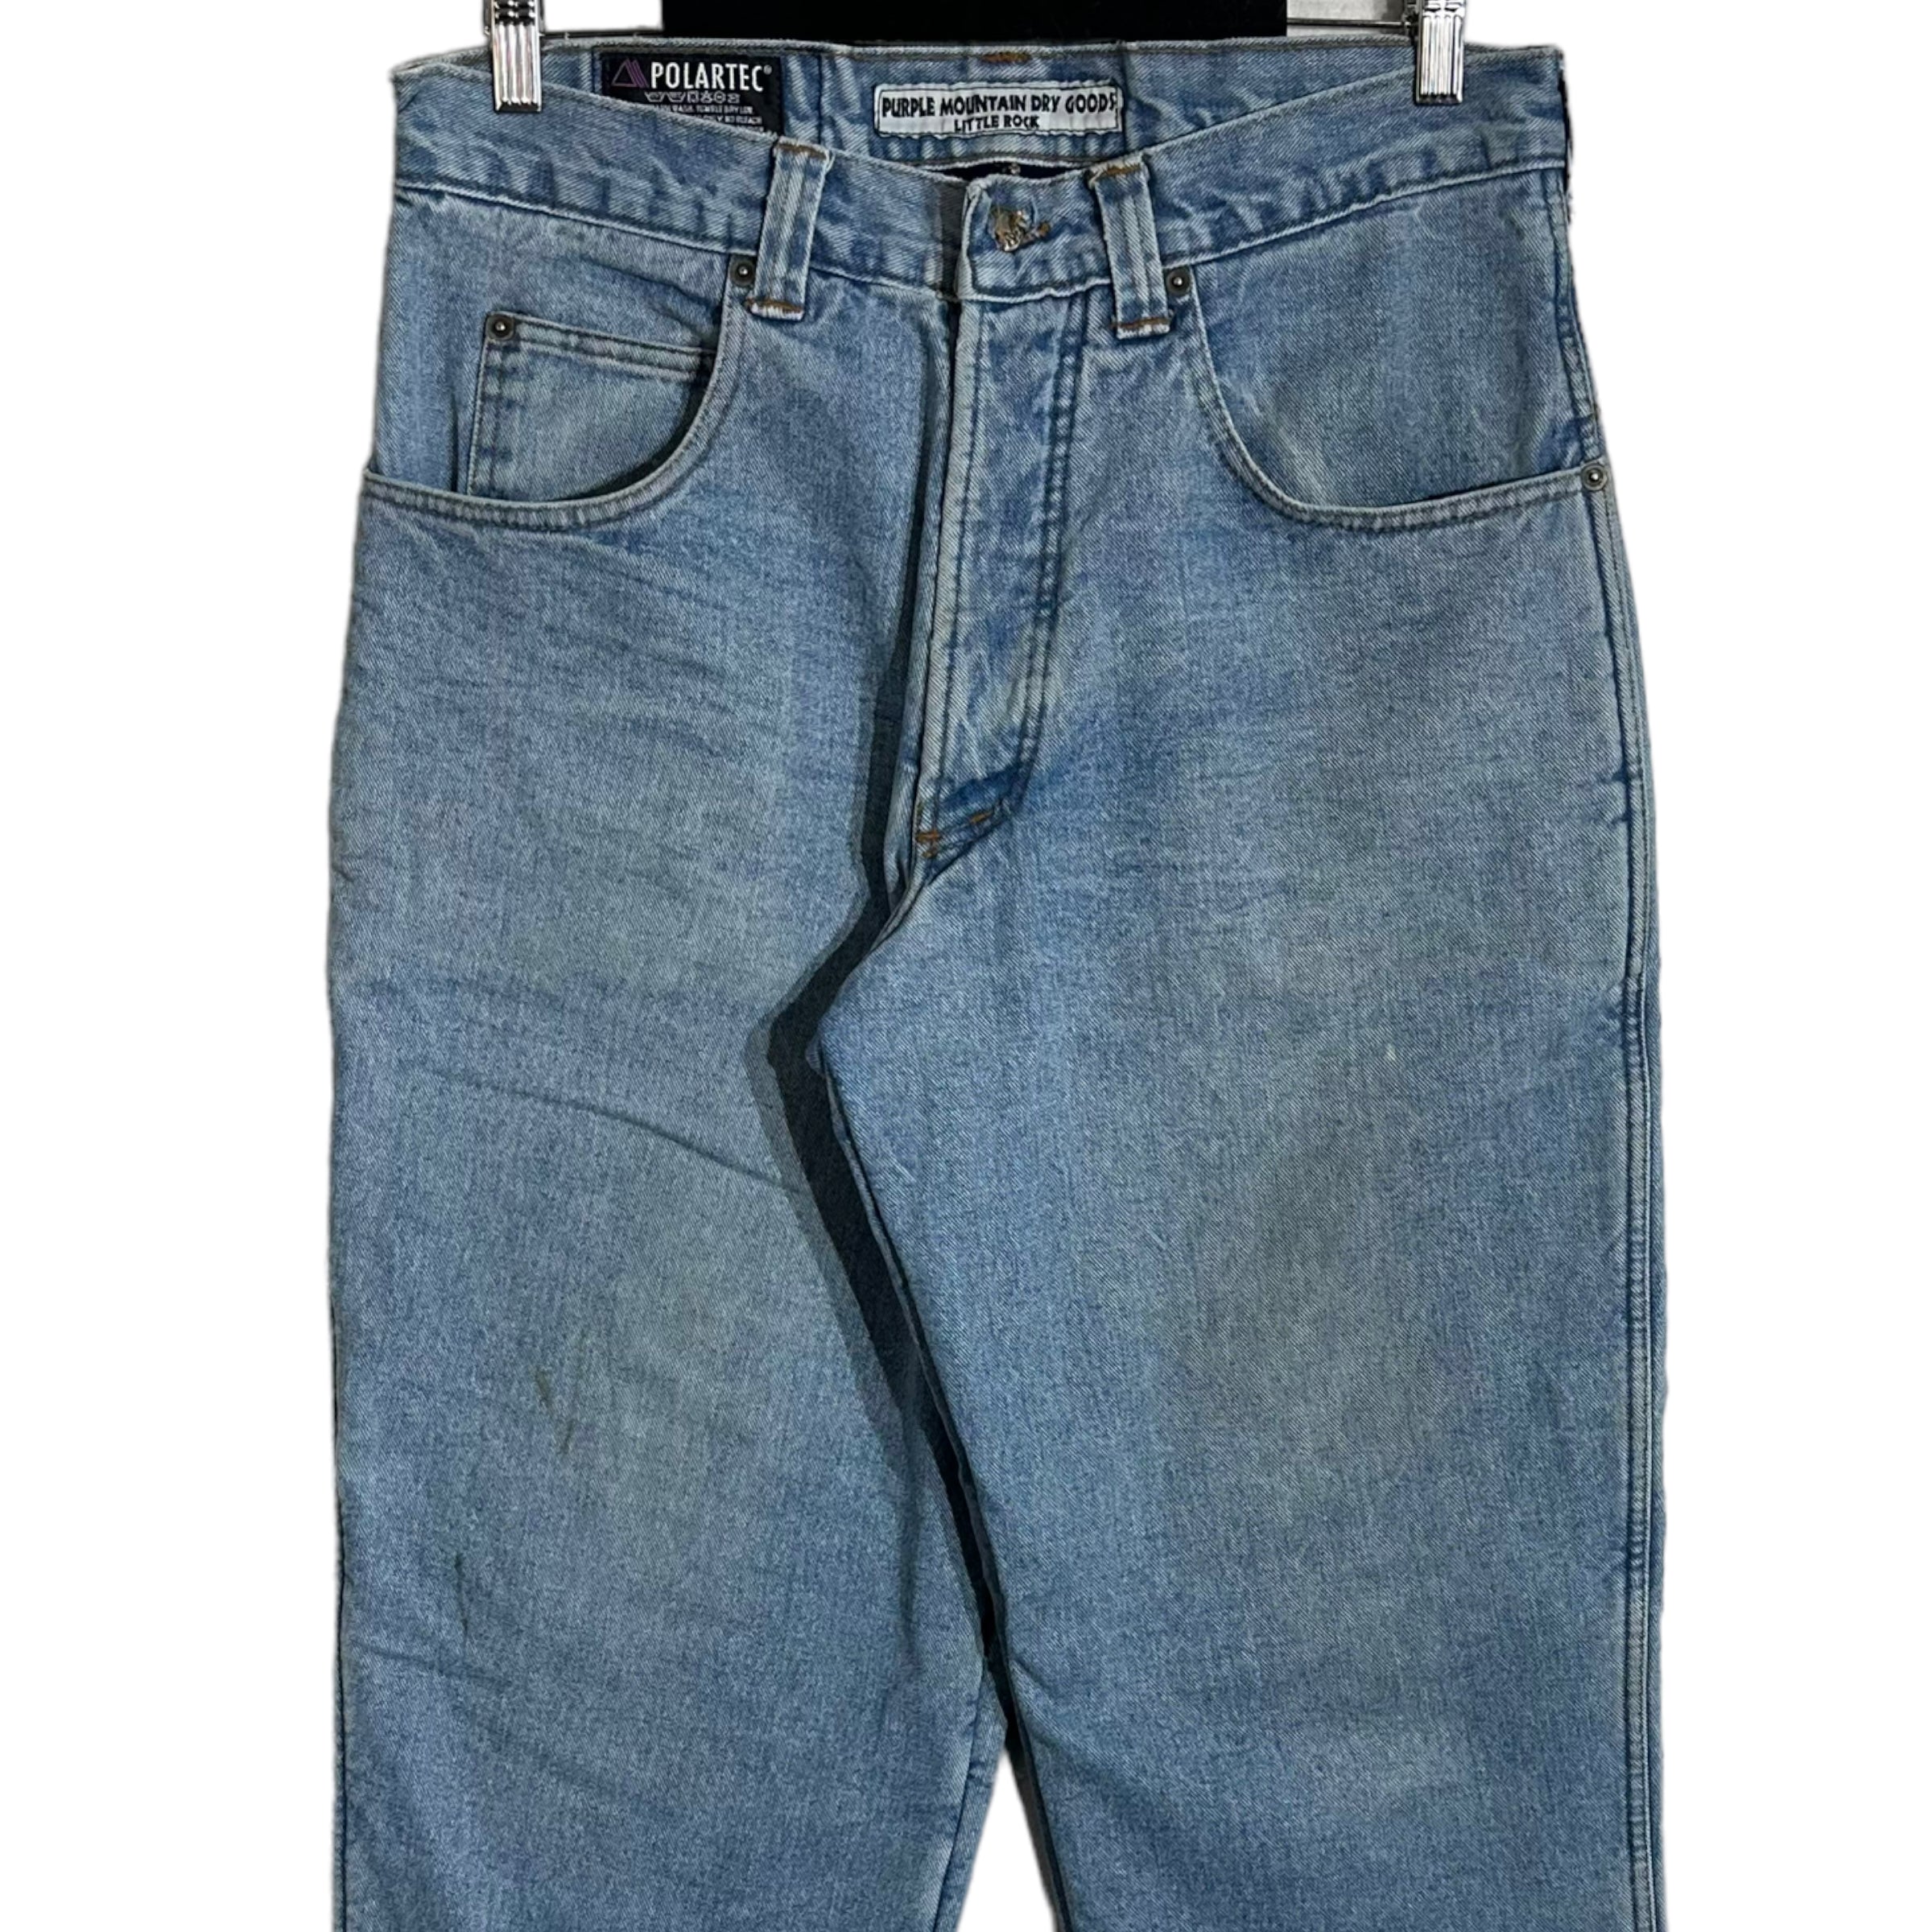 Vintage Polartec Fleece Lined Denim Jeans